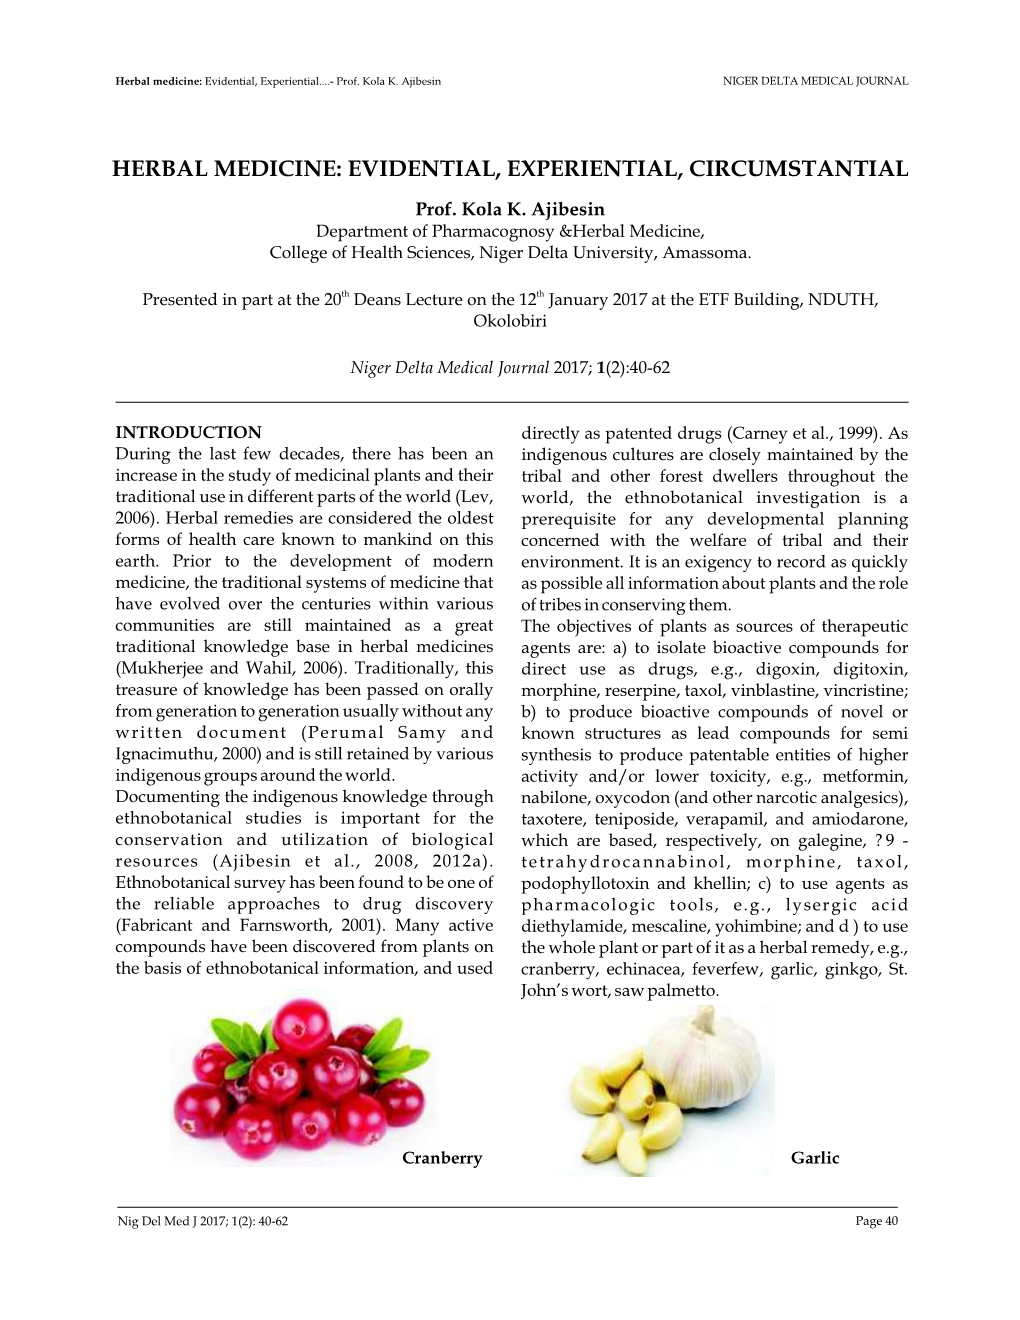 Herbal Medicine: Evidential, Experiential, Circumstantial